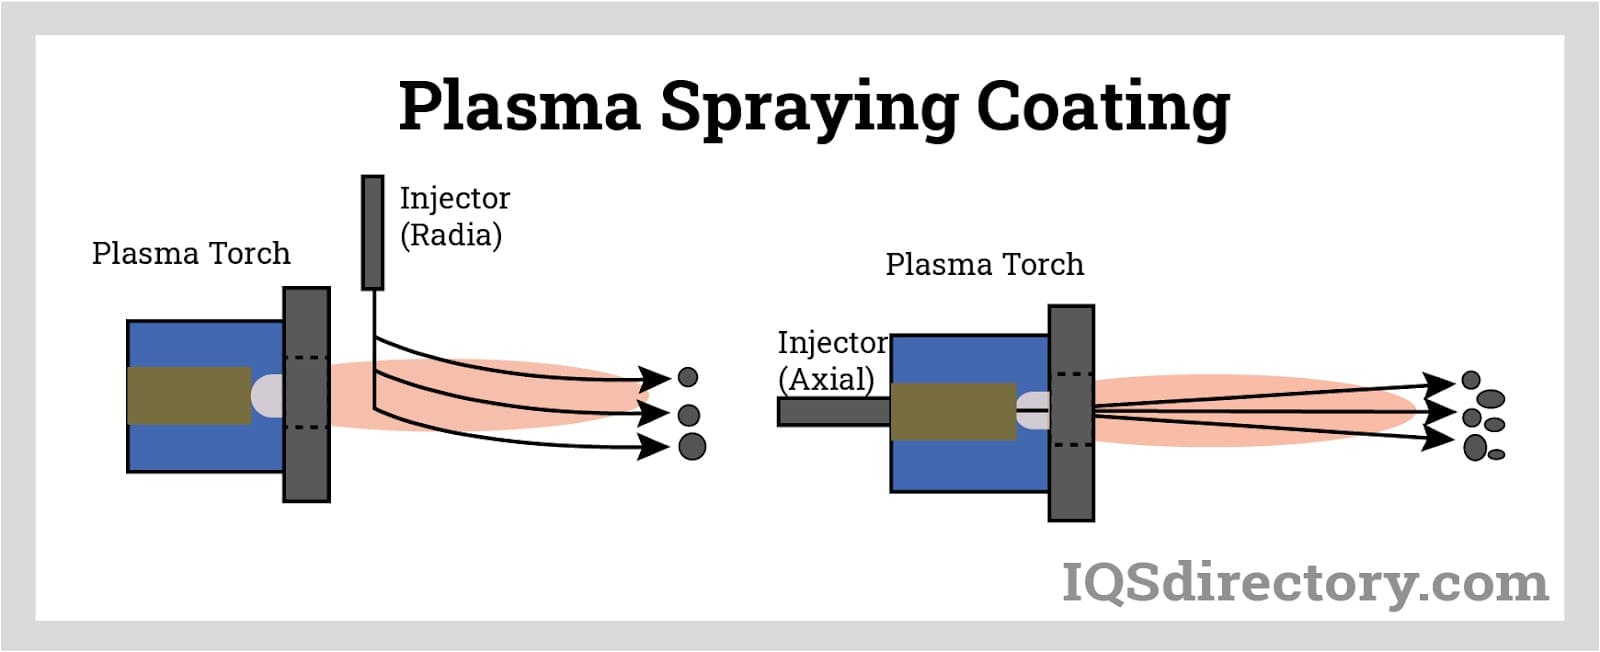 Plasma Spraying Coating